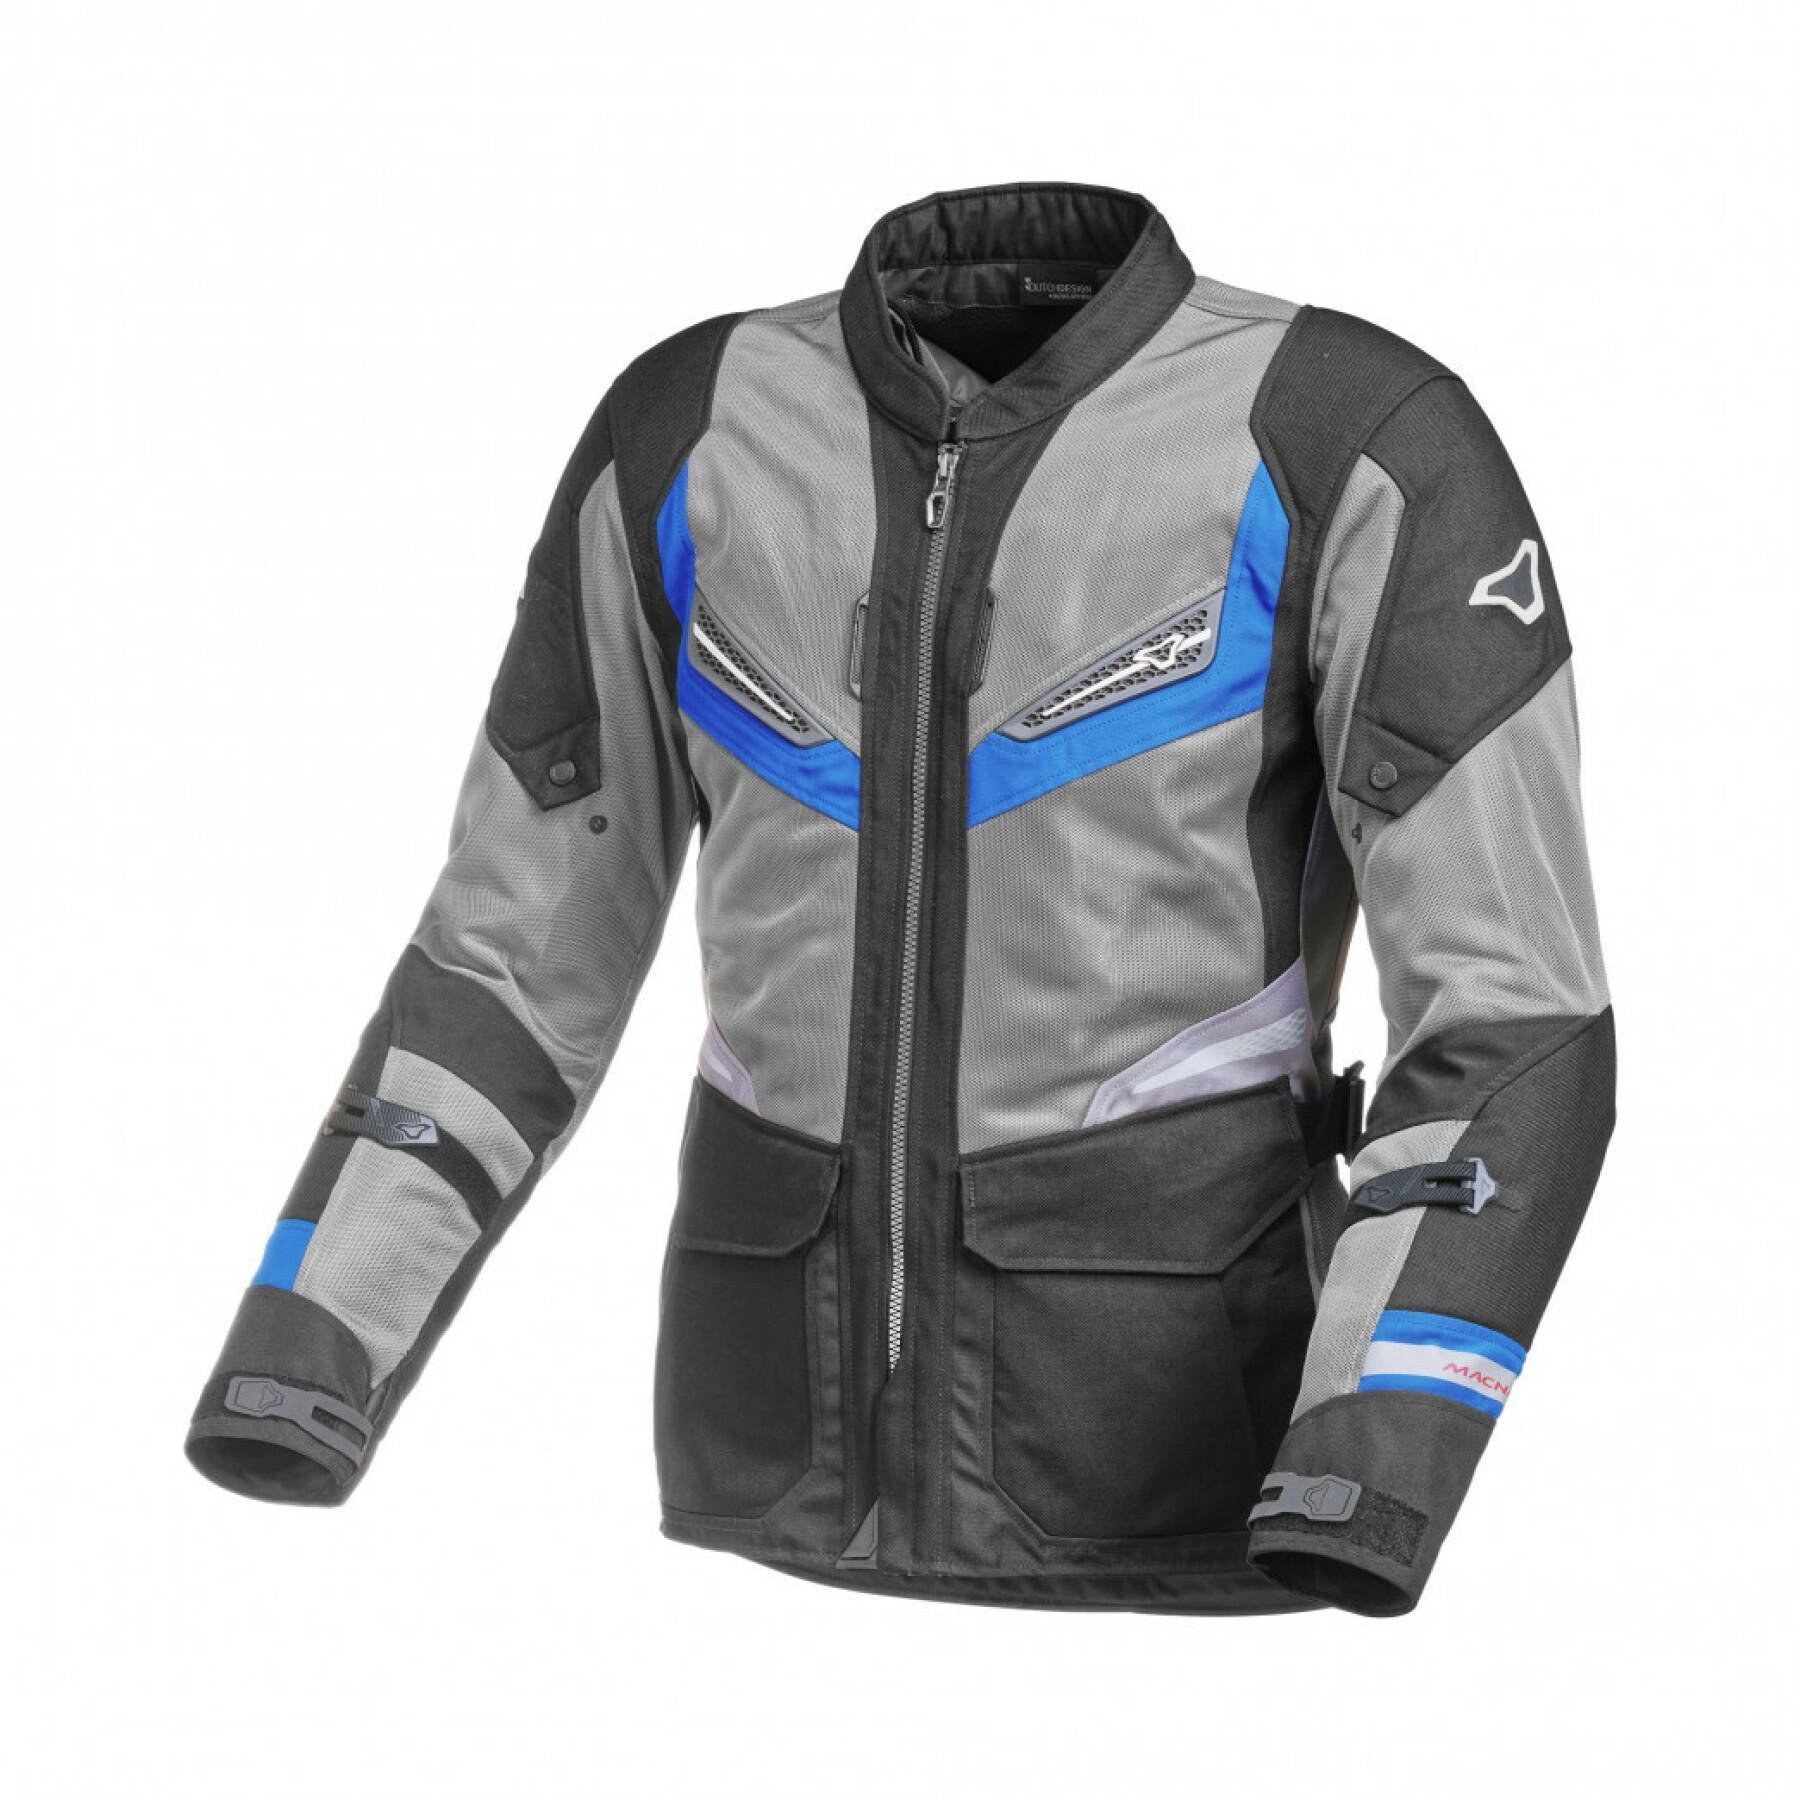 Motorcycle jacket Macna Aerocon